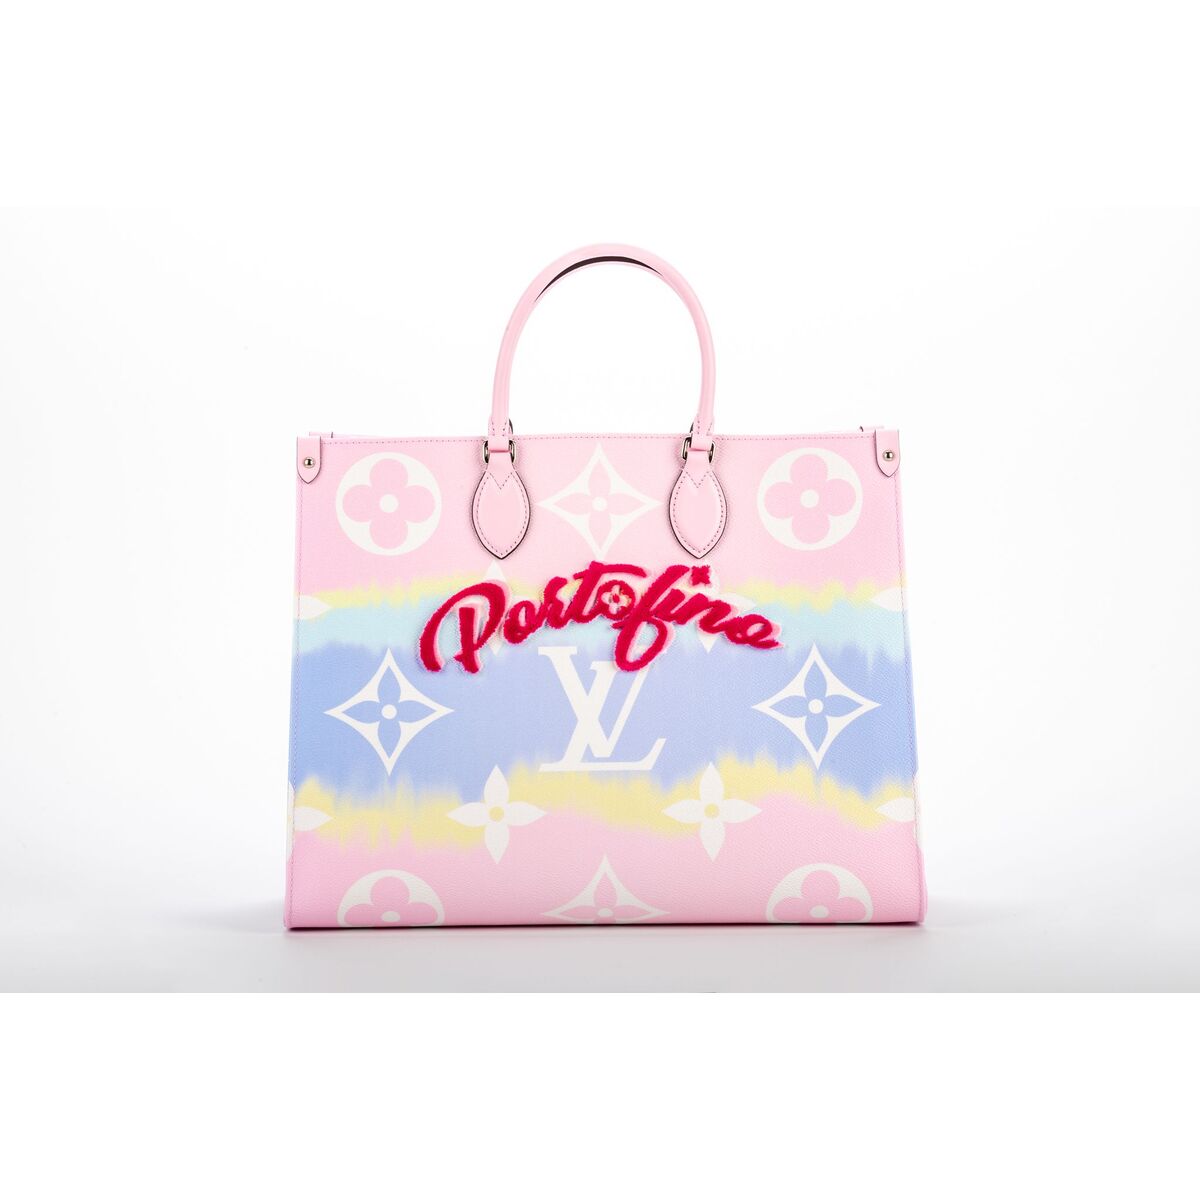 New in Box Louis Vuitton Portofino On The Go Limited Edition Bag